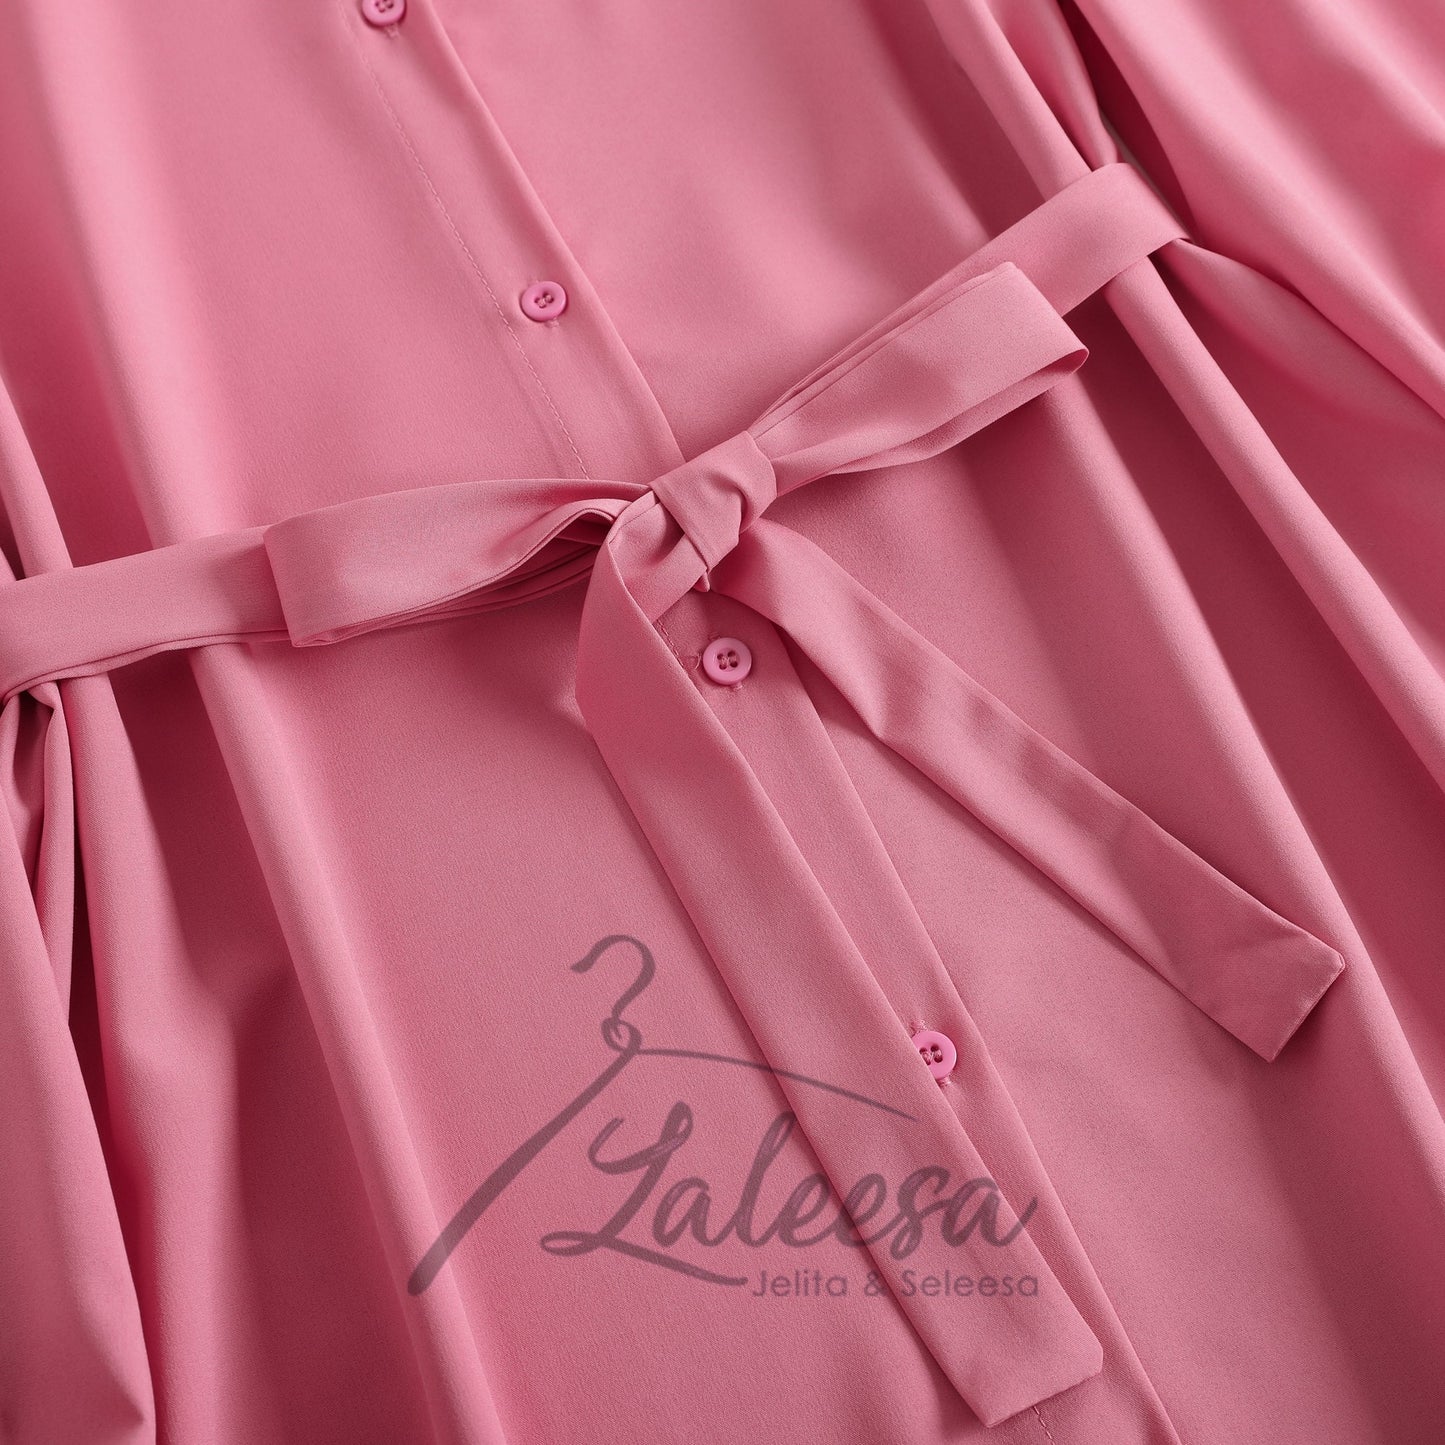 LALEESA DRESS FAKHIRA LD270208 <BF Friendly Series> Full Button Belted Dress Muslimah Dress Women Dress Jubah Abaya